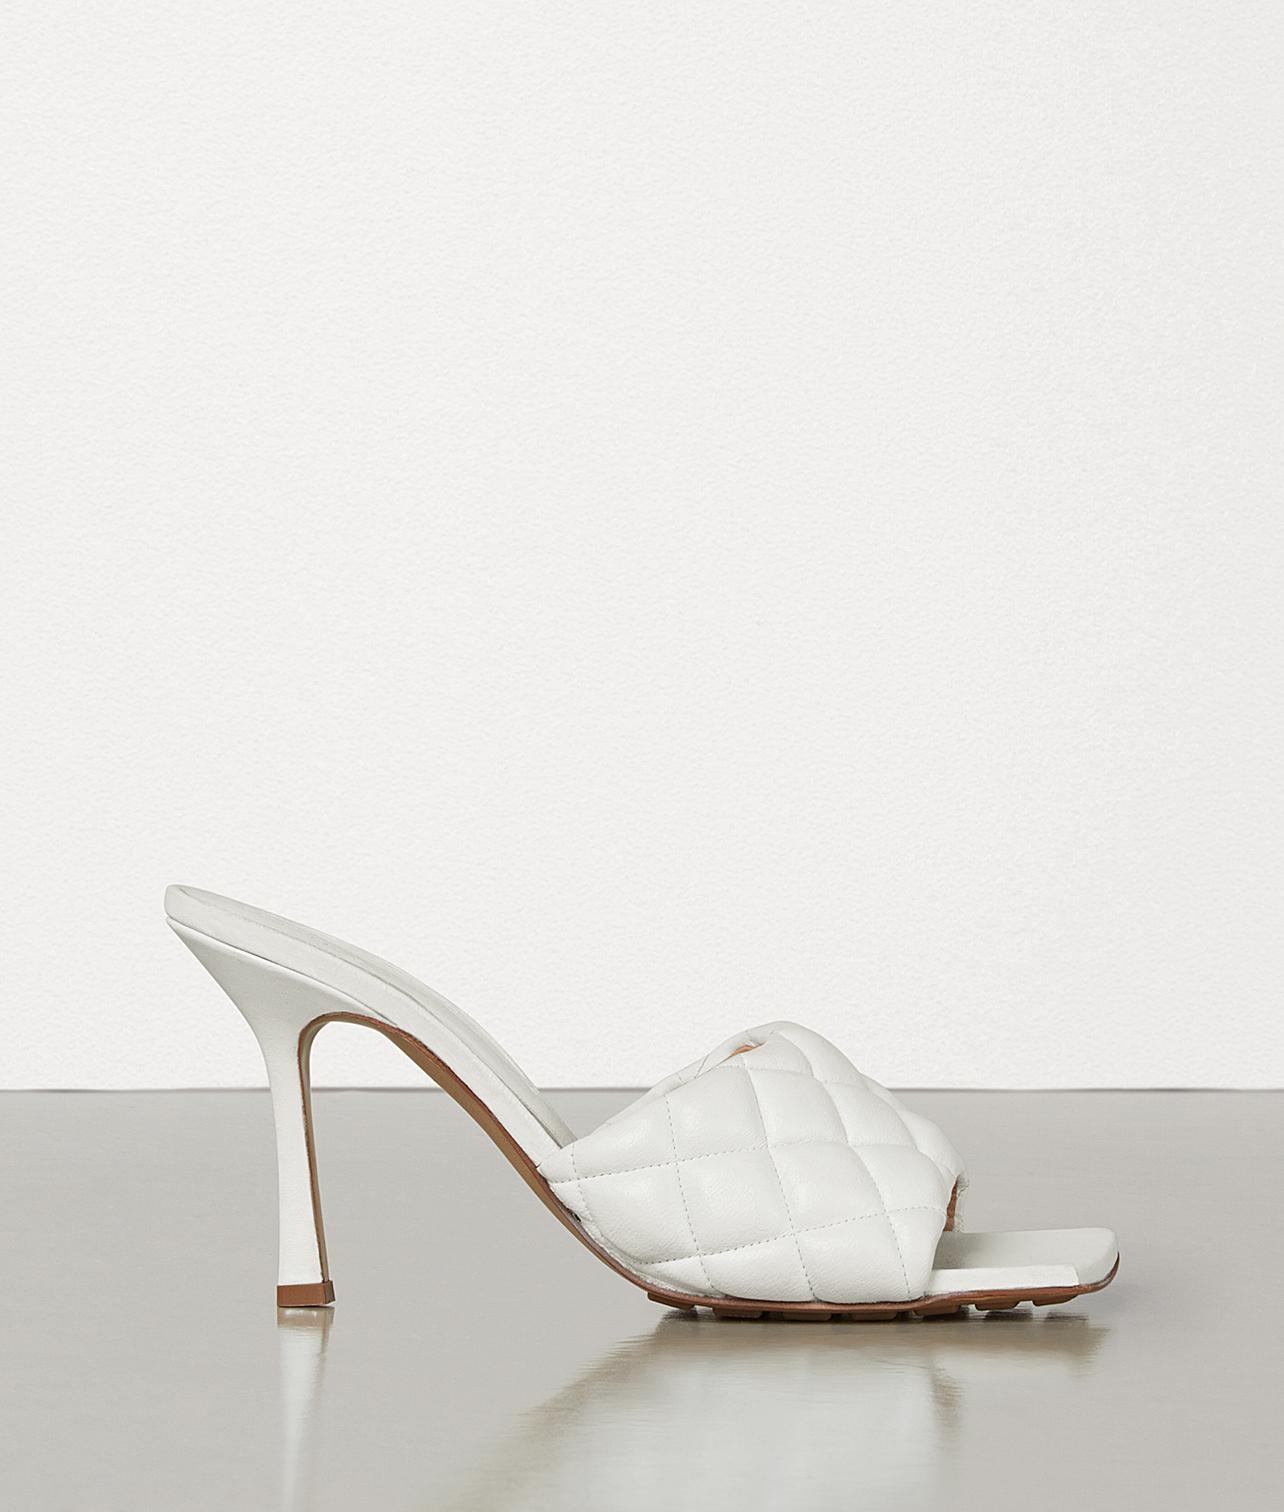 Bottega Veneta Leather Padded Sandals In Nappa Dream in White - Lyst